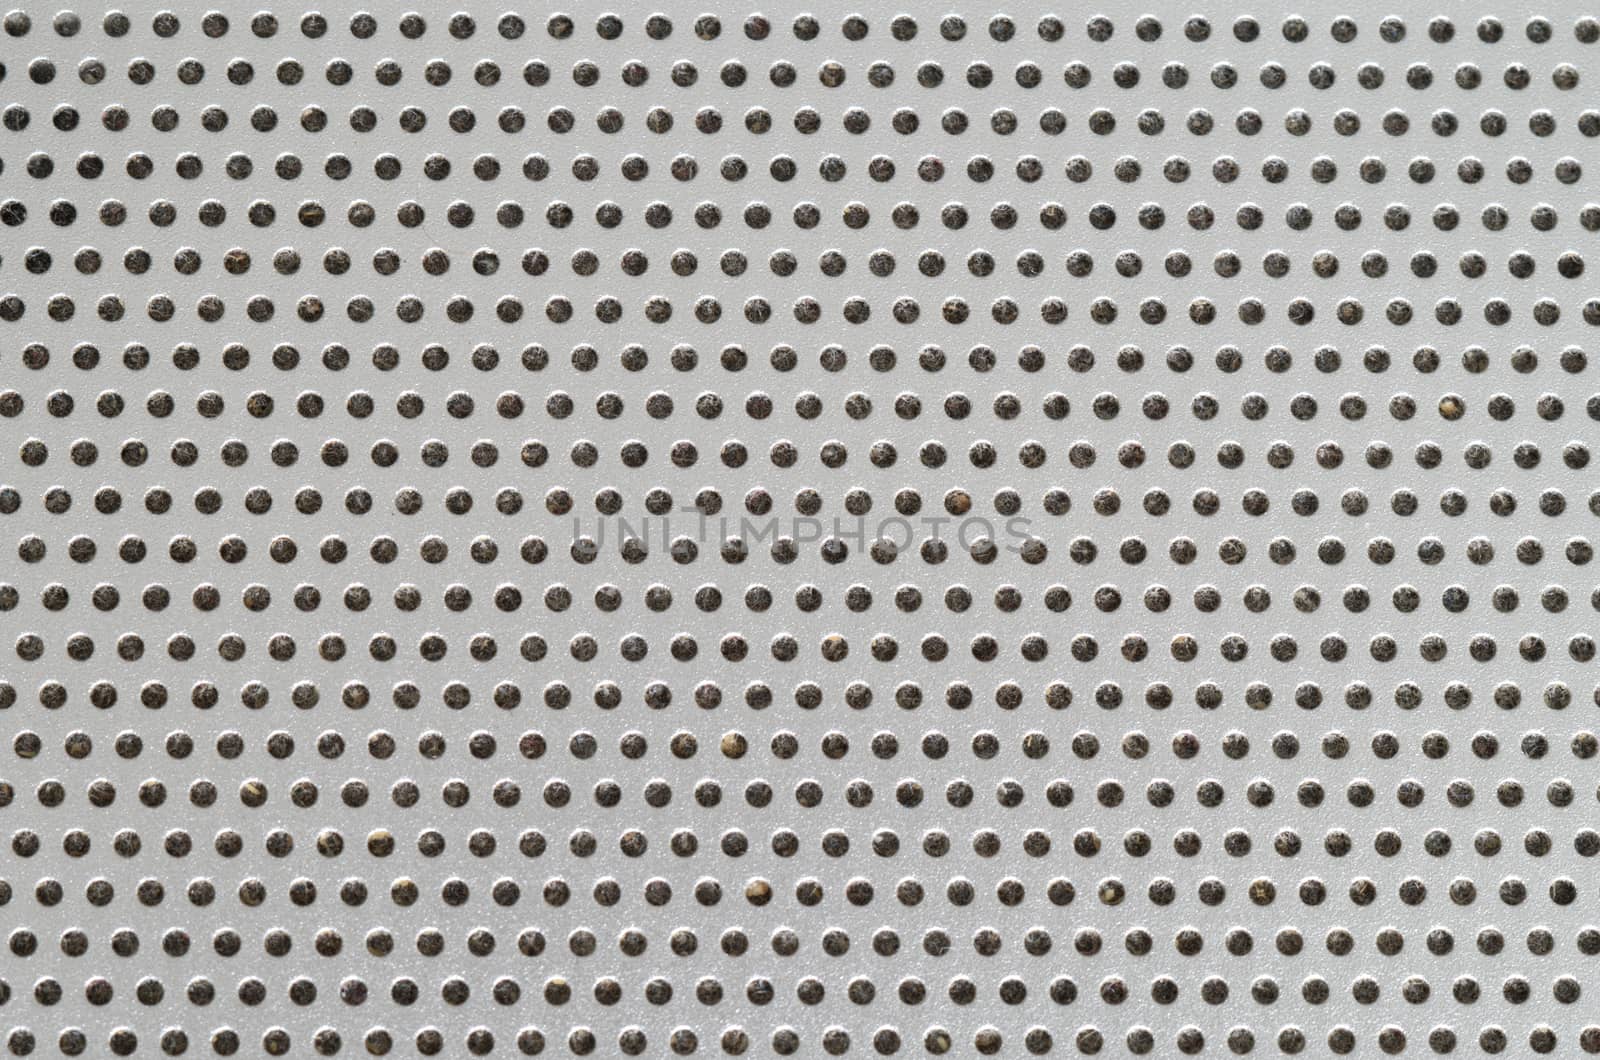 Laptop Speaker Hole grid metallic pattern macro with dust inside the holes